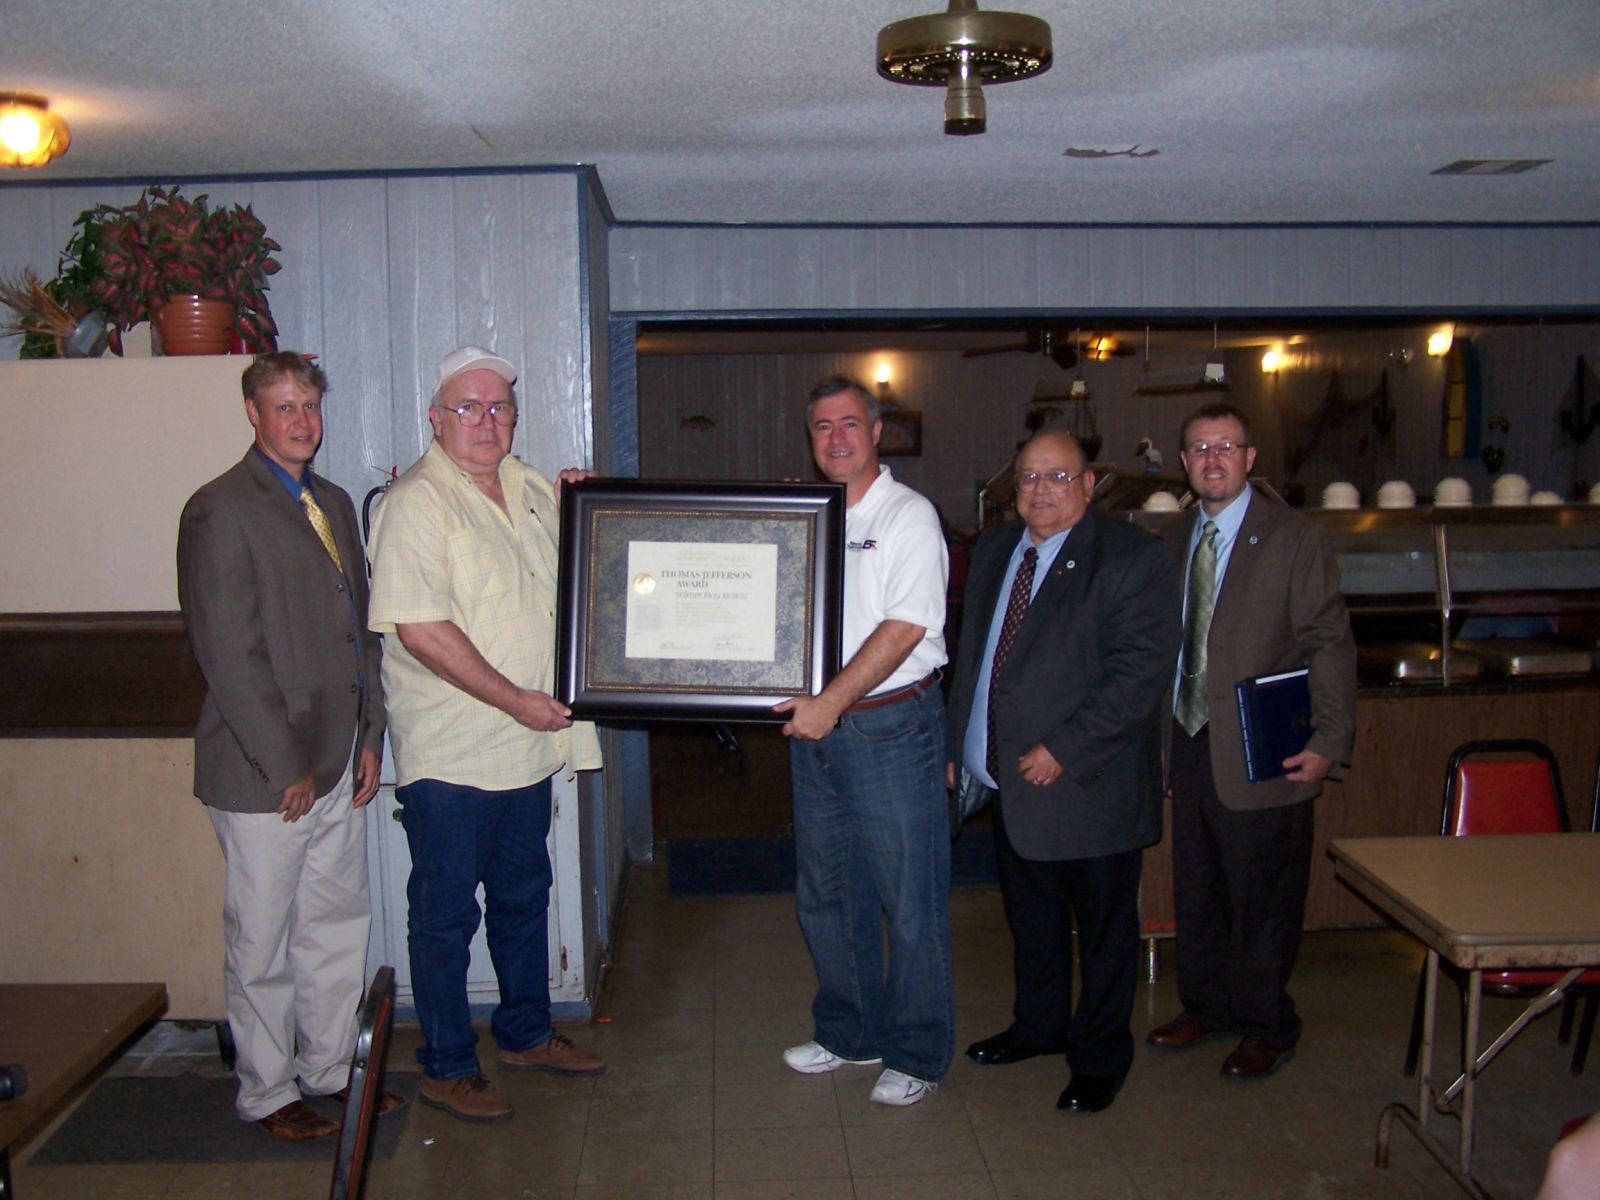 Wilmer Ray Bailey of Jena, LA, received the Thomas Jefferson Award in 2011